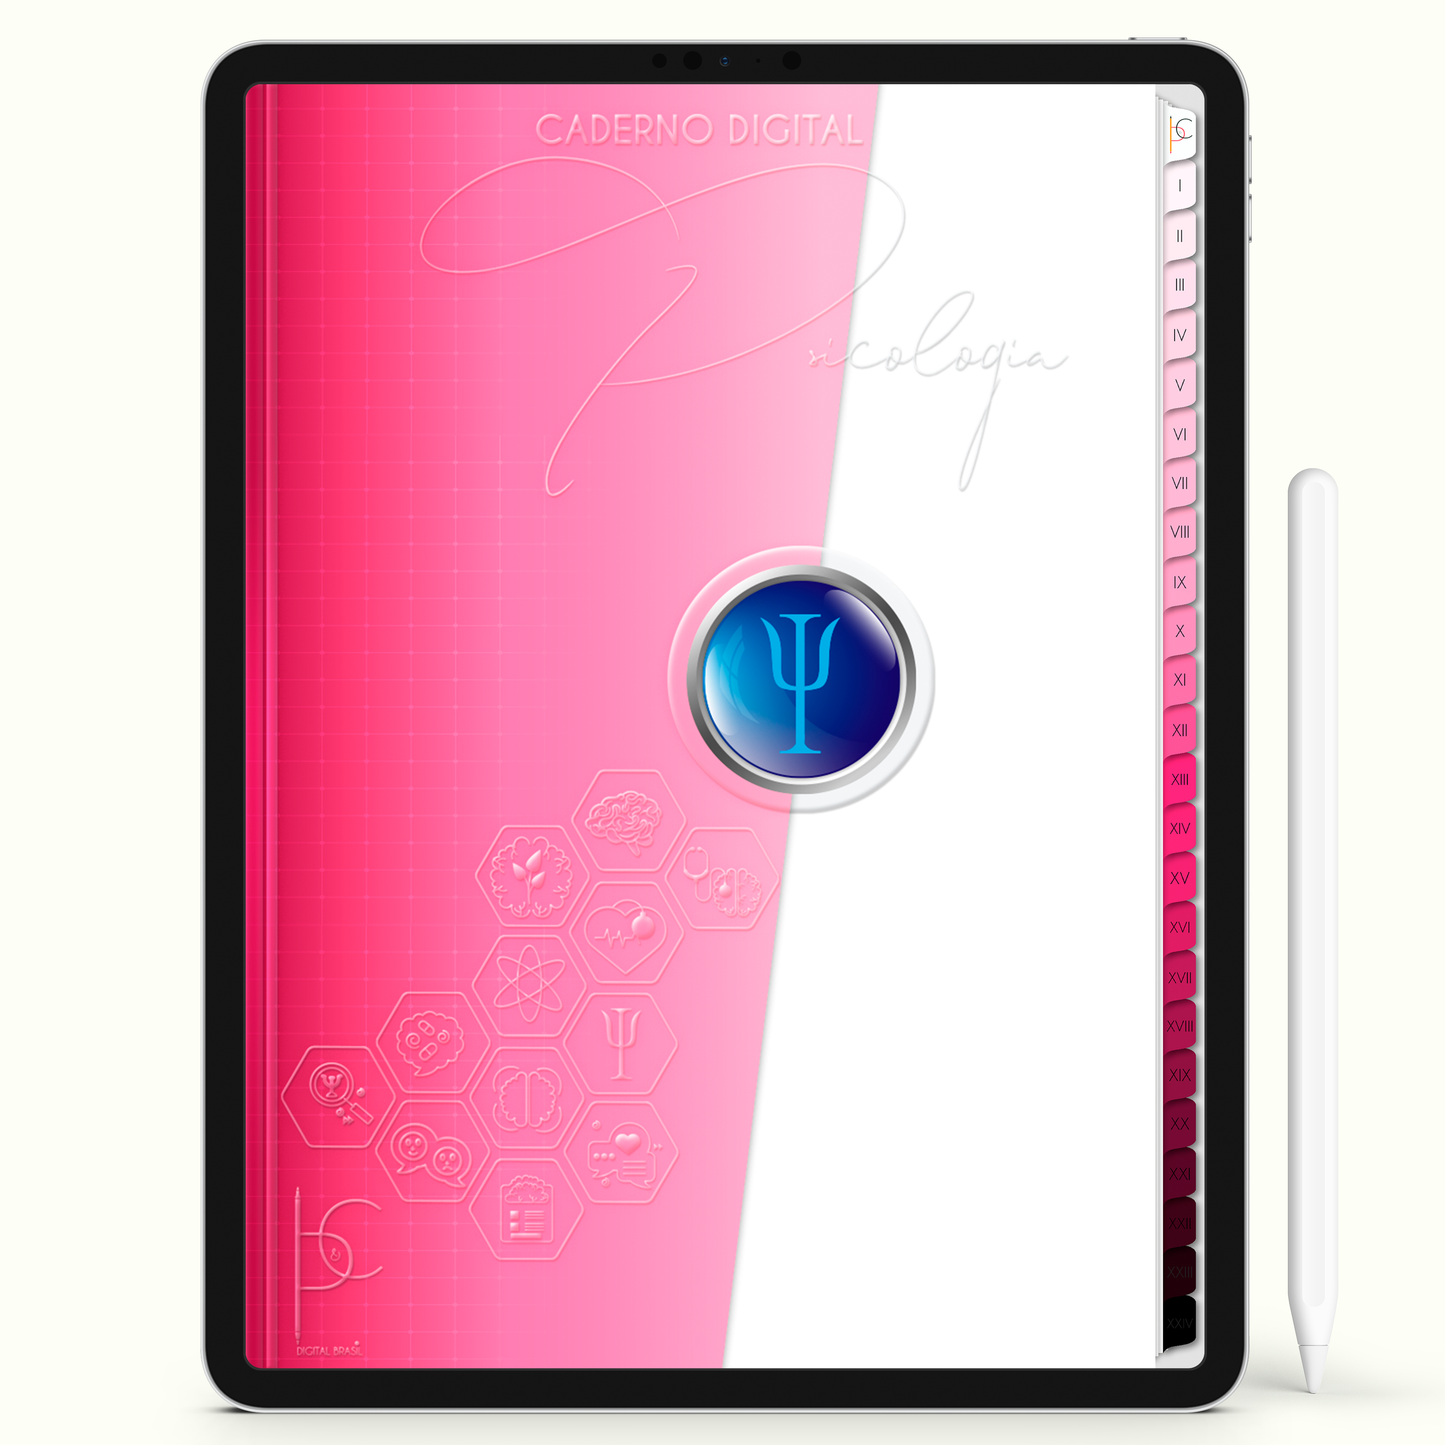 Caderno Digital Blush Psicologia Psi 24 Matérias • iPad e Tablet Android • Download instantâneo • Sustentável